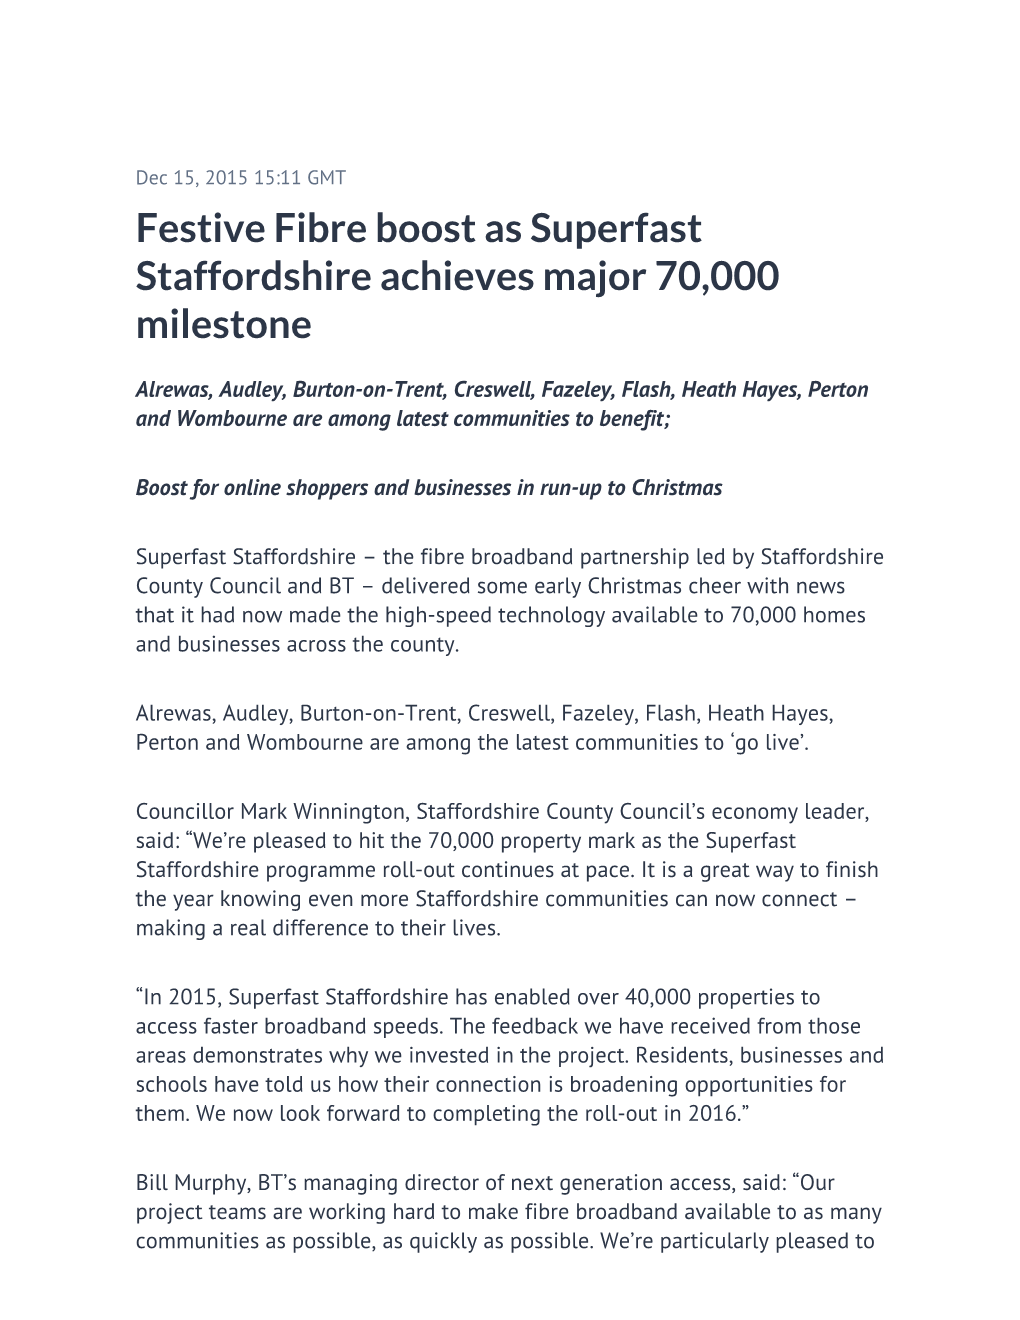 Festive Fibre Boost As Superfast Staffordshire Achieves Major 70,000 Milestone